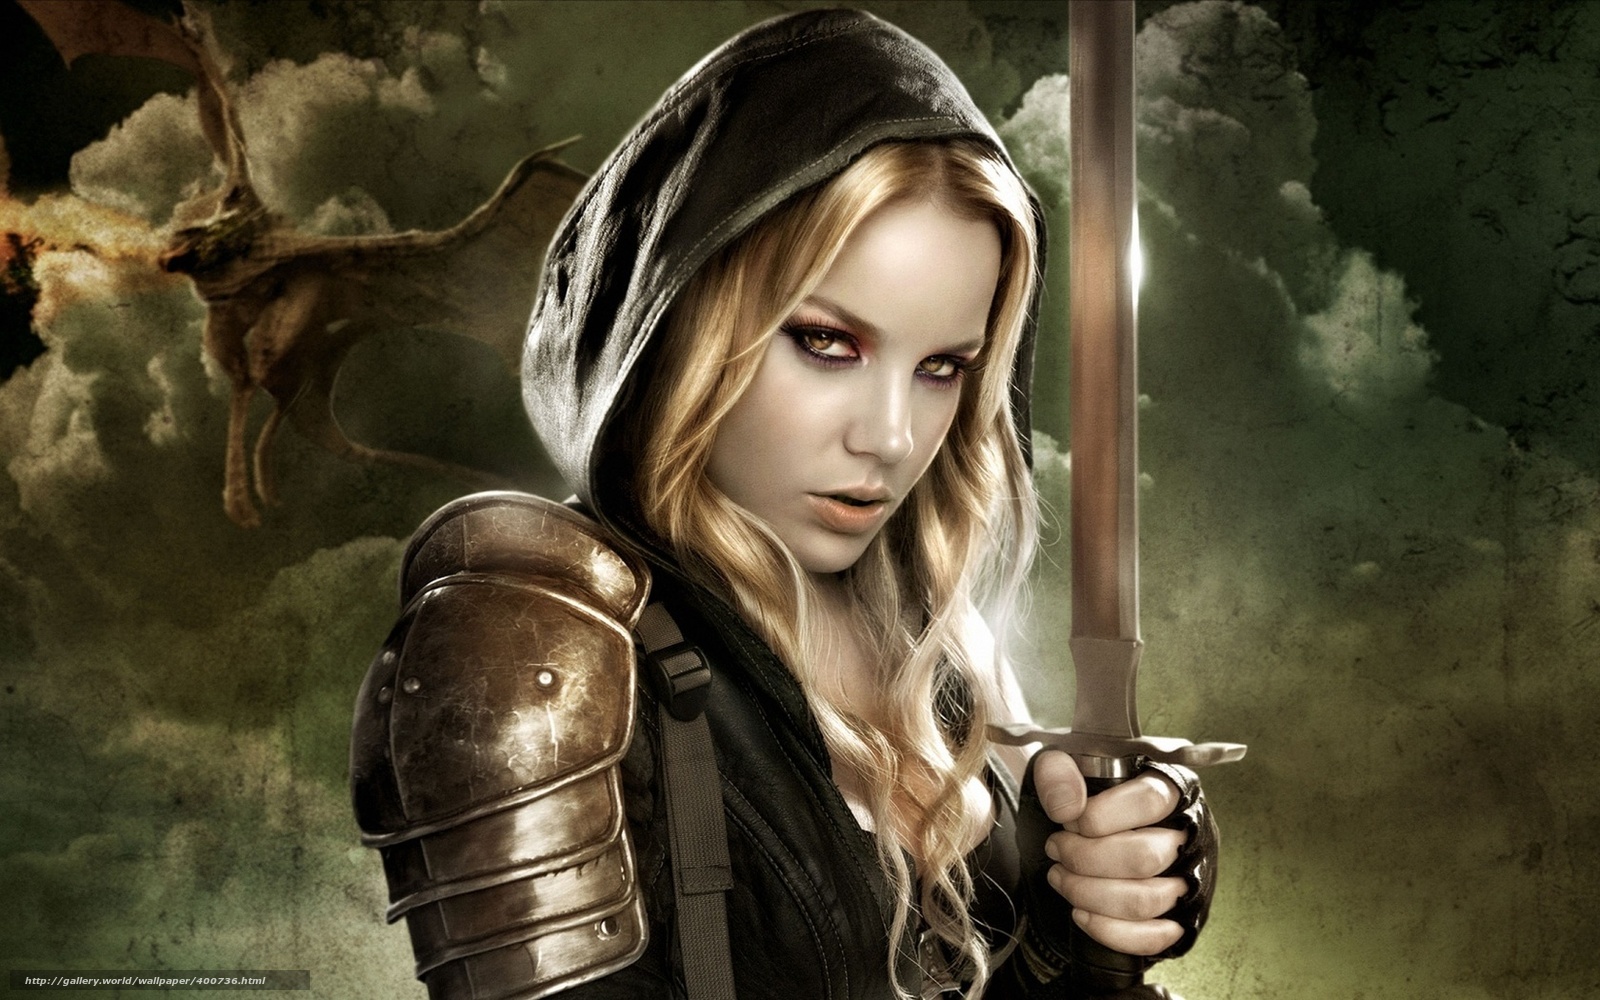 Wallpaper Fantasy Girl Warrior Sword Desktop